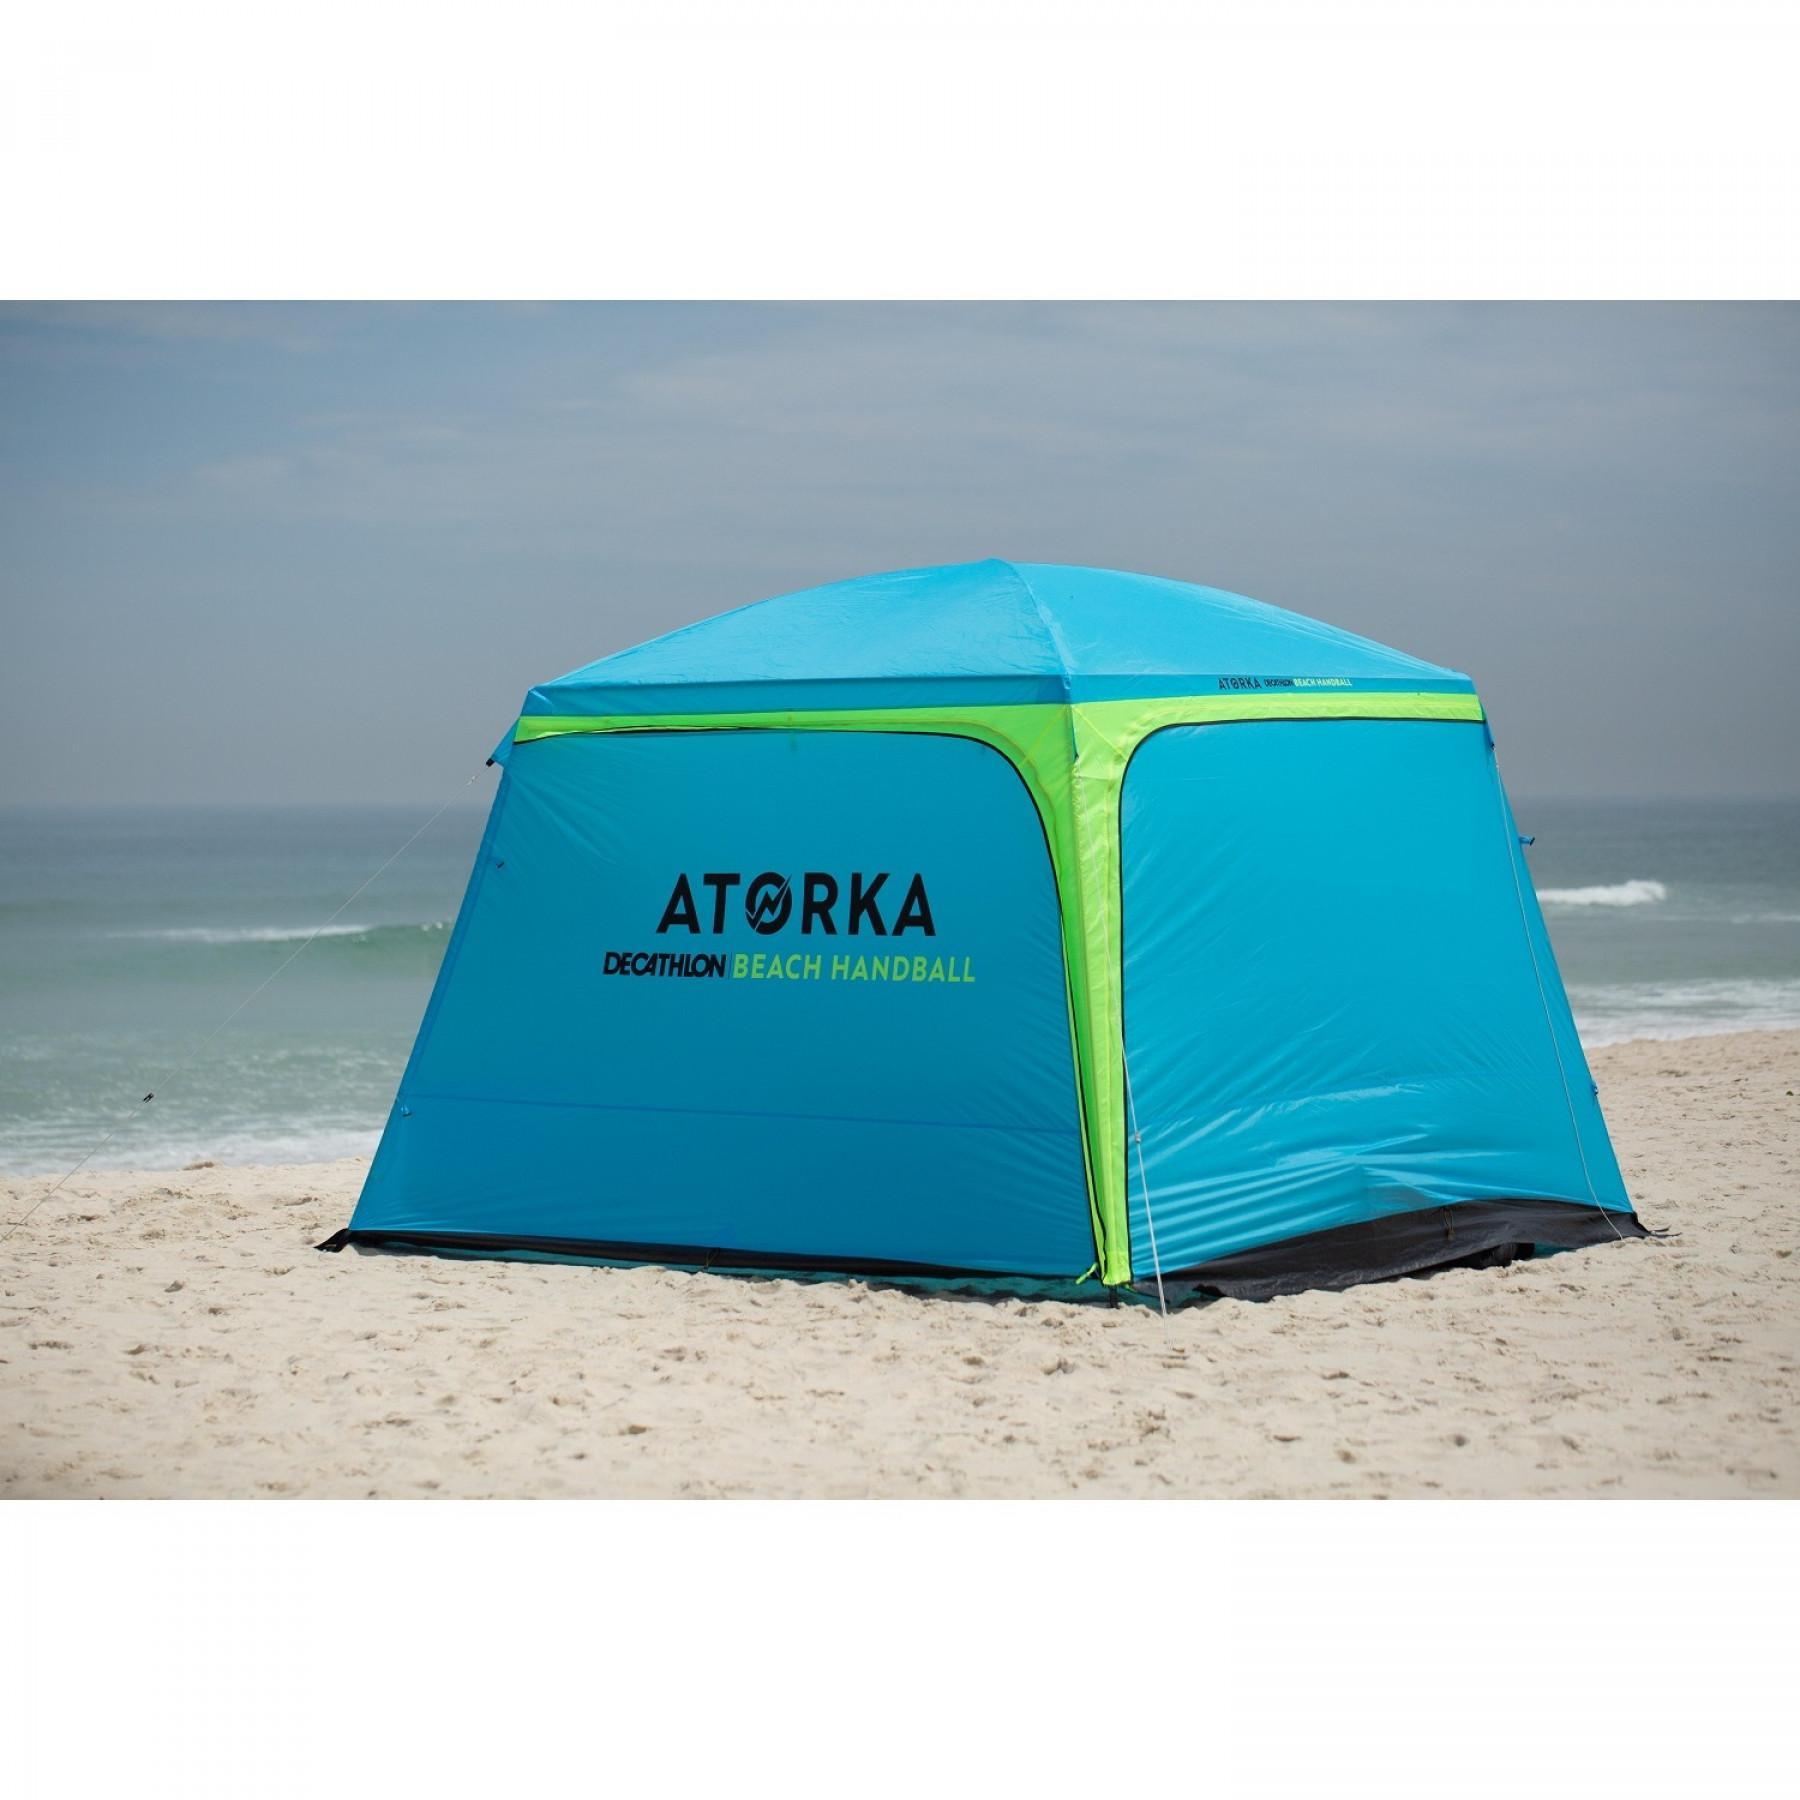 Beach event tent Atorka